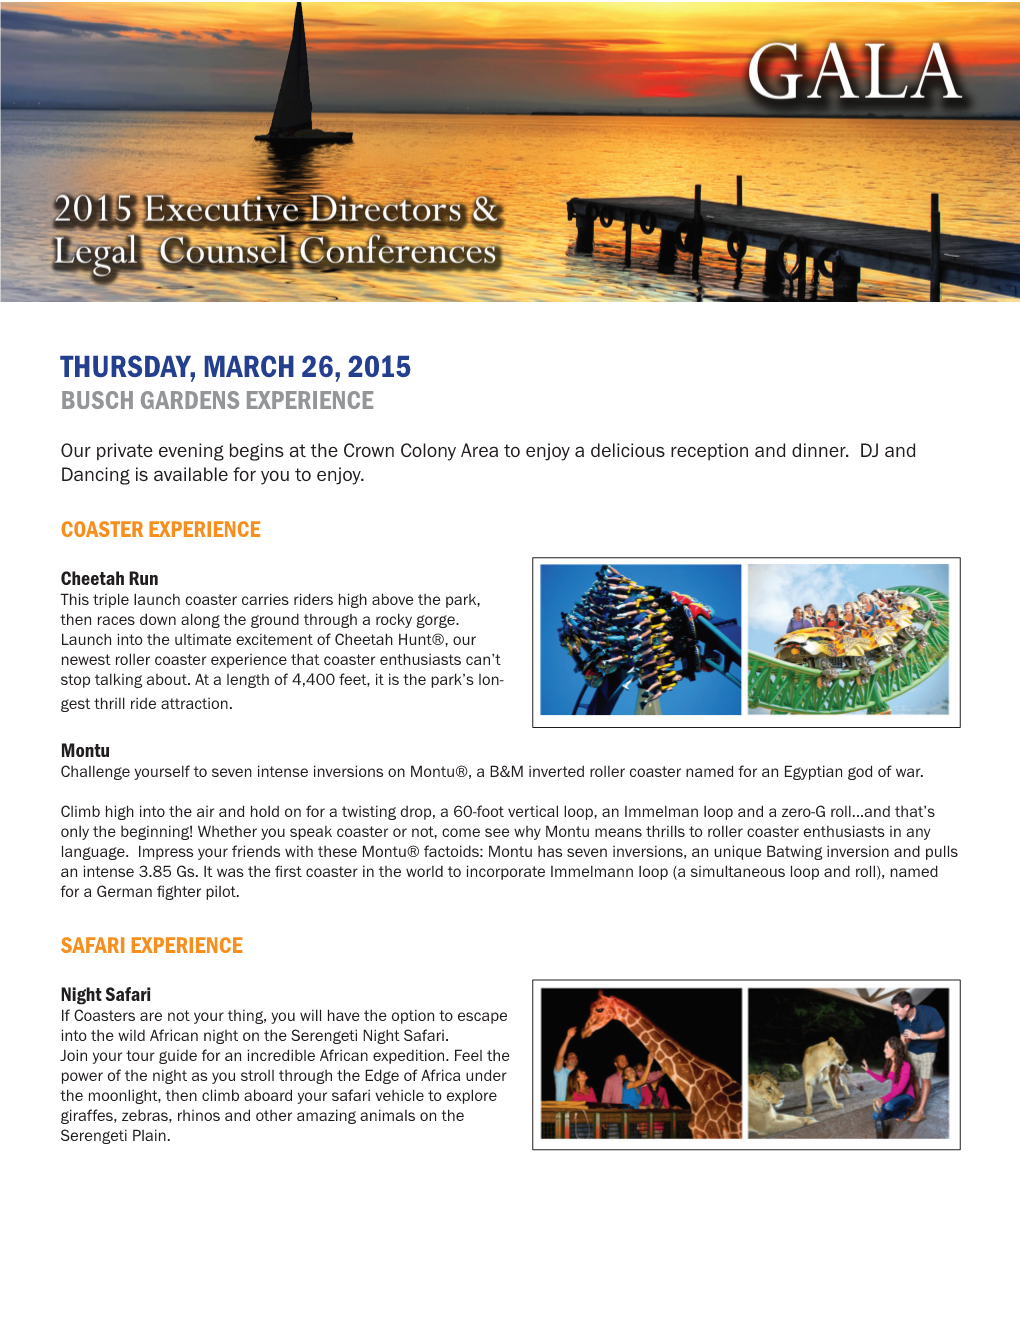 Thursday, March 26, 2015 Busch Gardens Experience